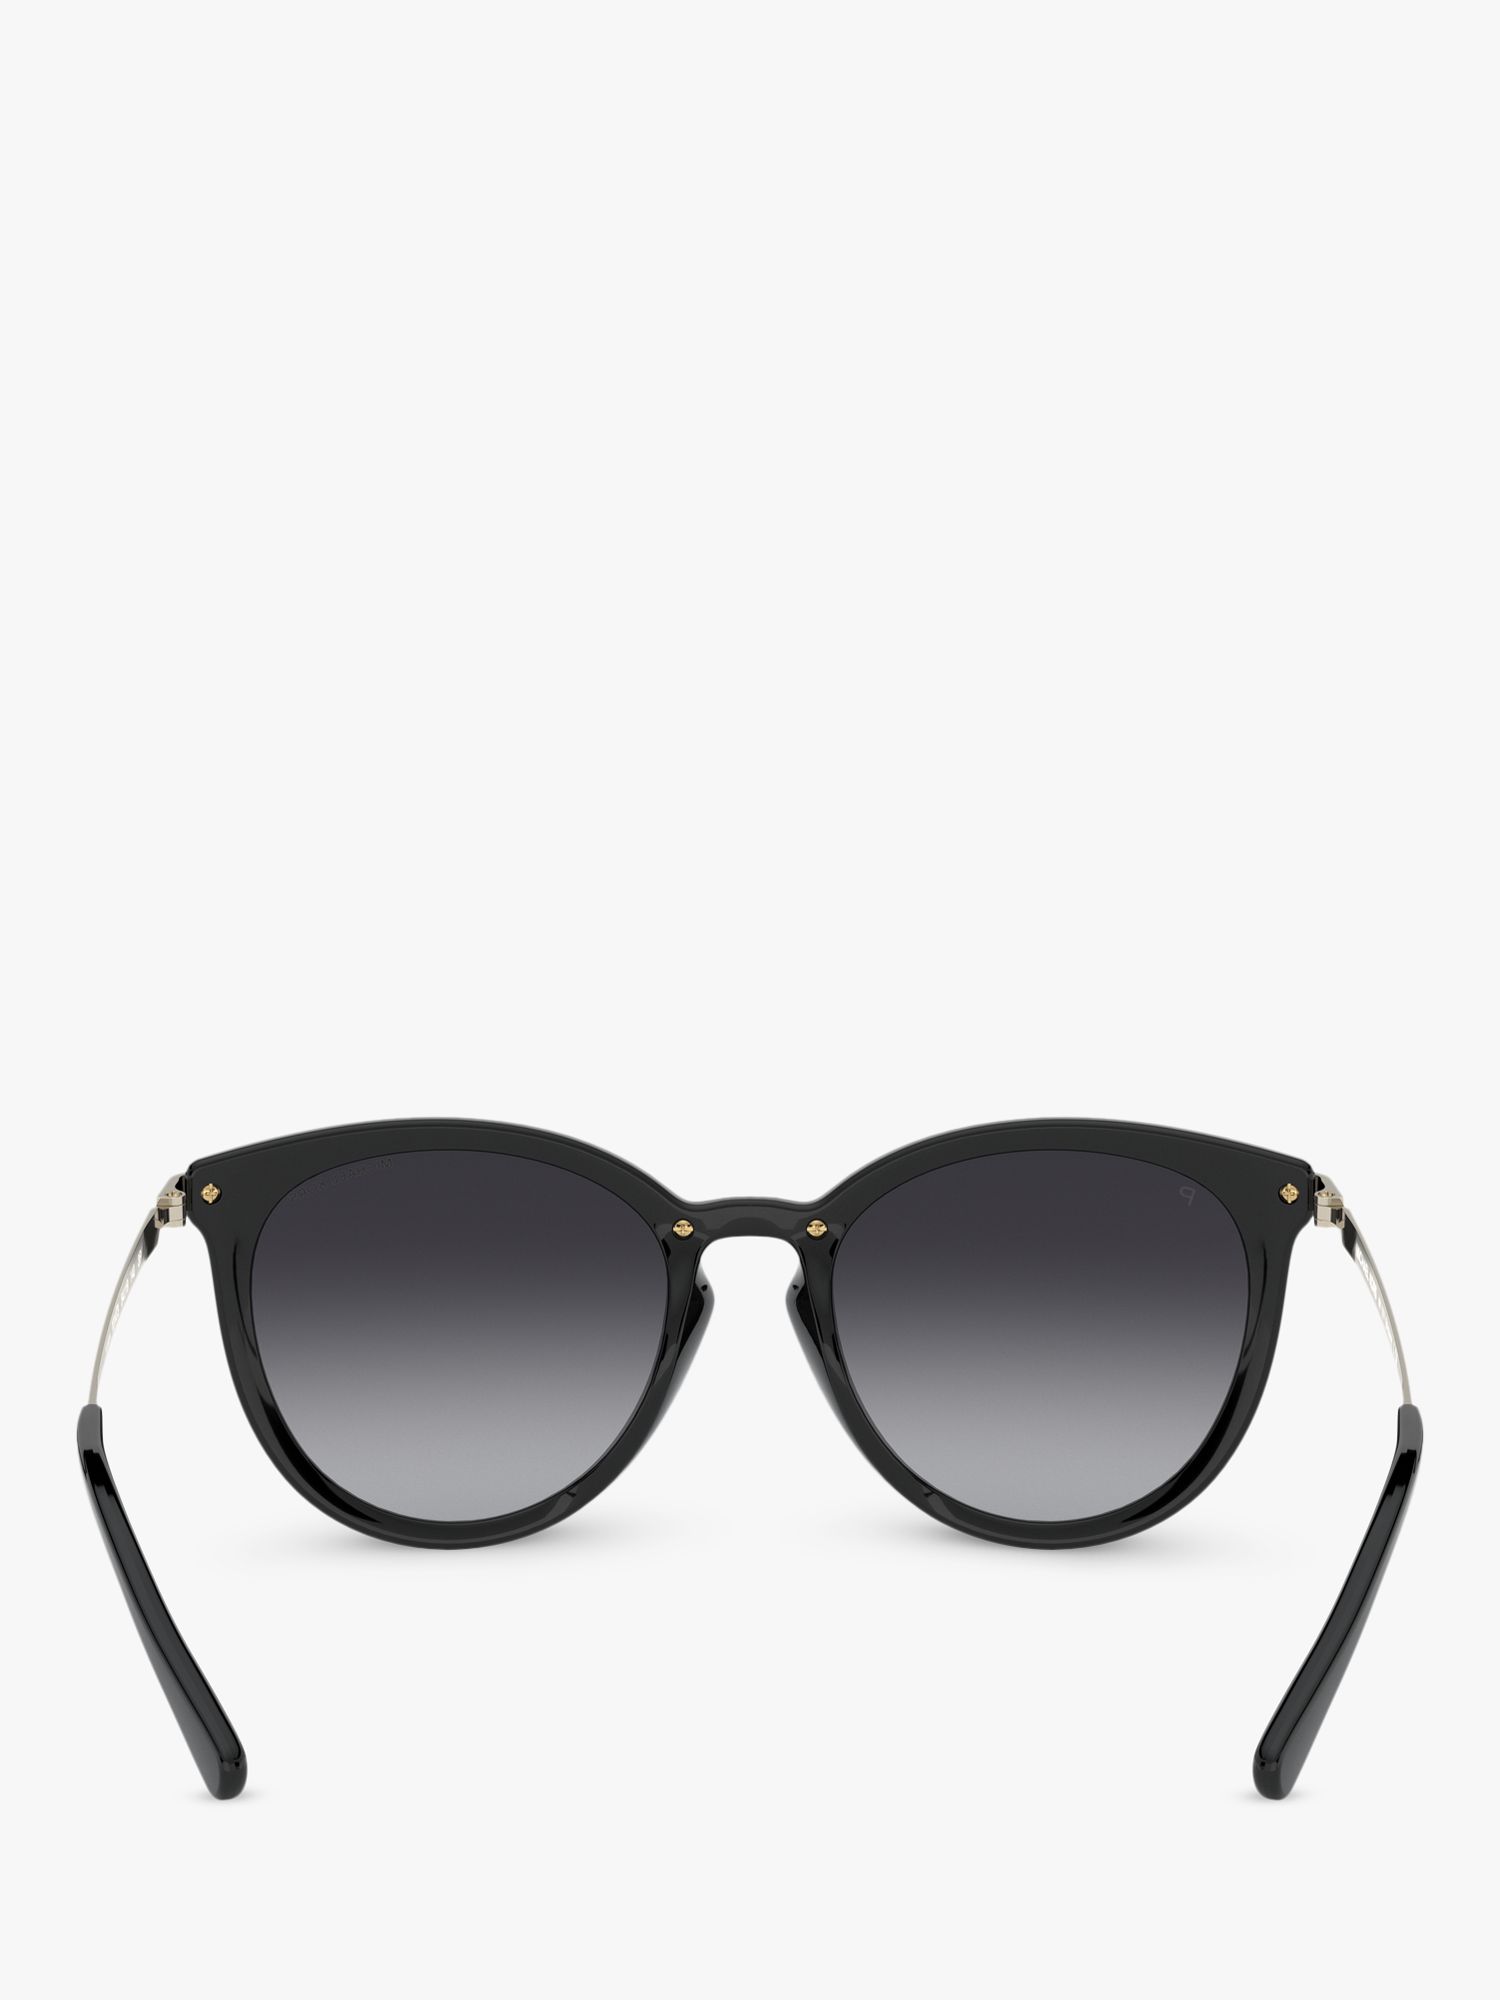 Michael Kors Mk1077 Women S Brisbane Polarised Round Sunglasses Black Gold Black Gradient At